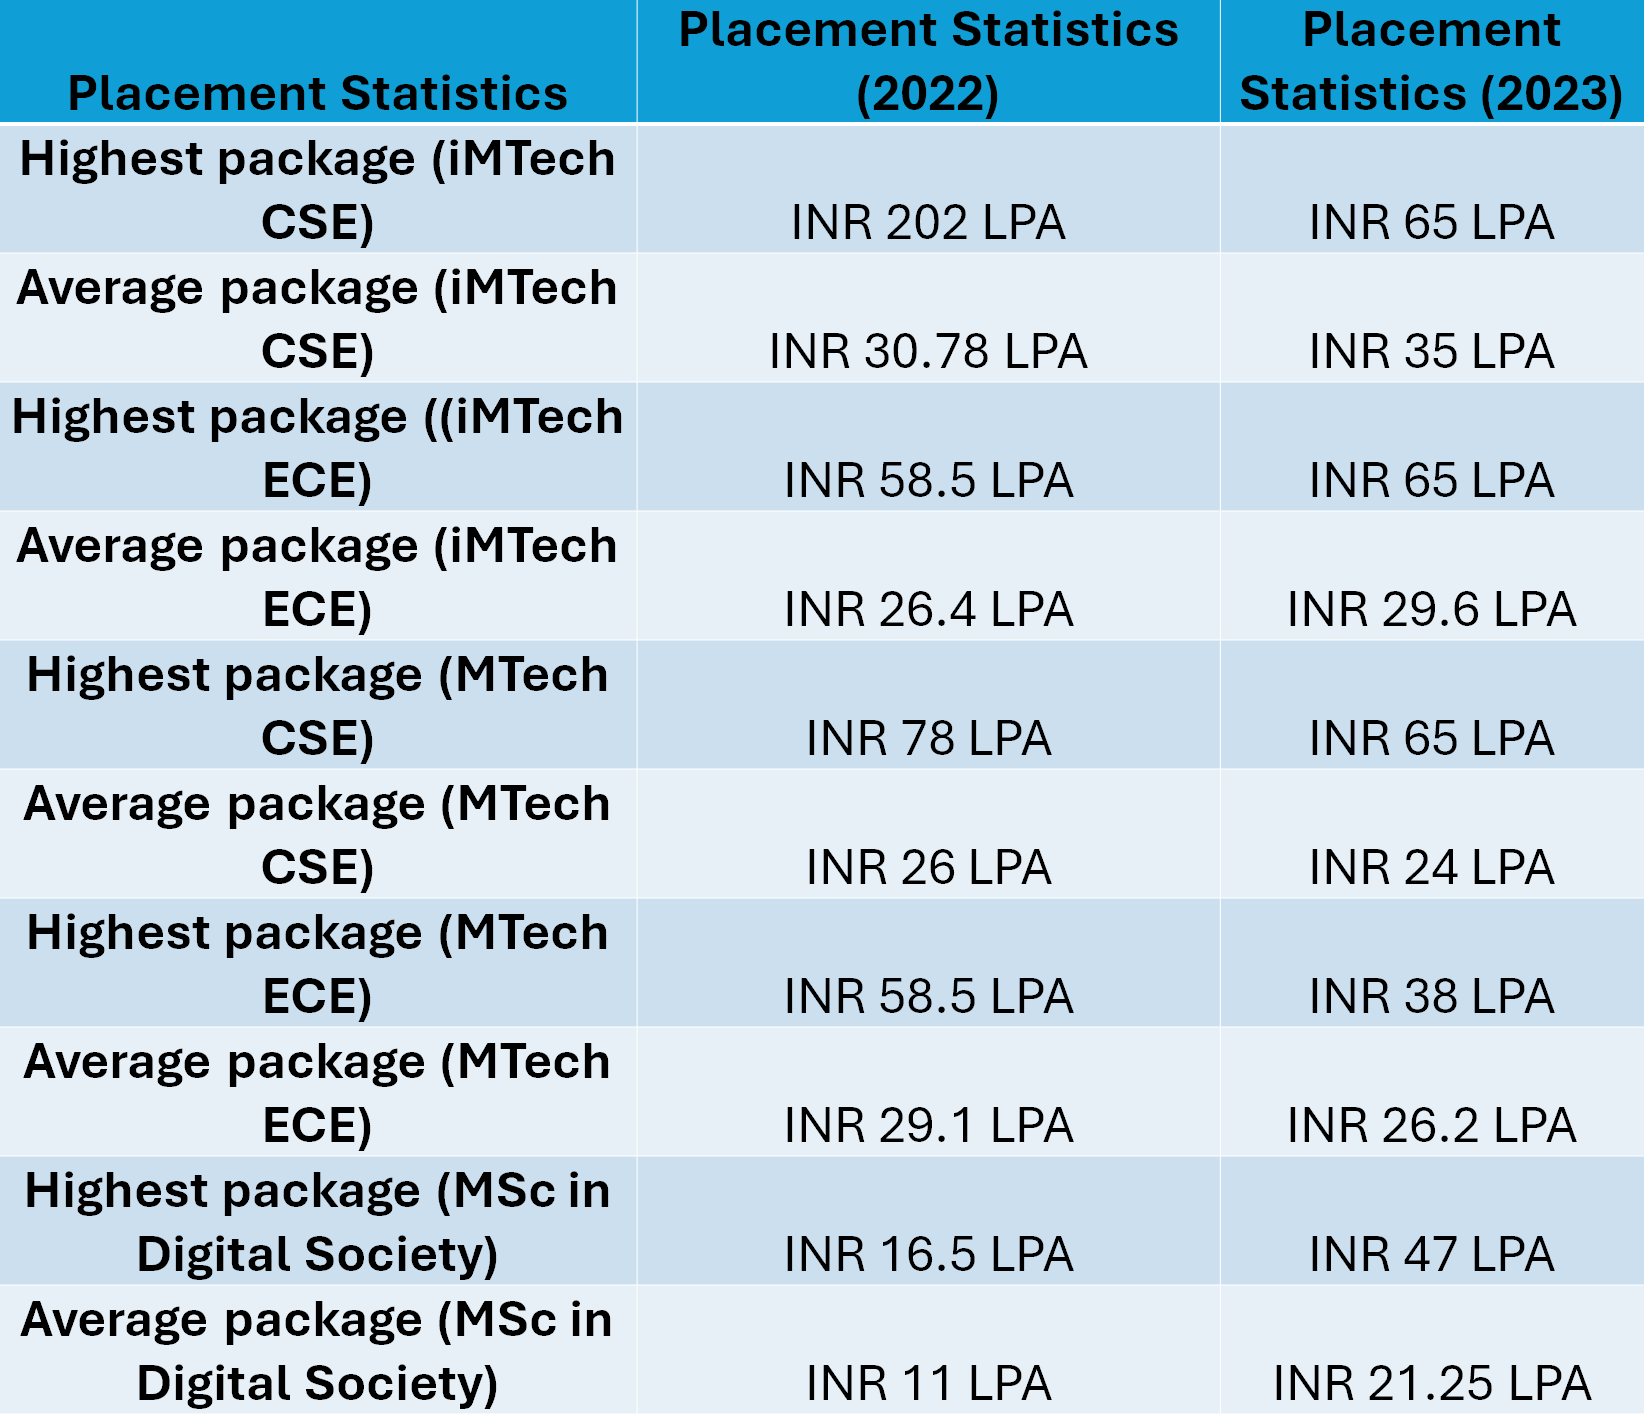 Placement Statistics of IIITB